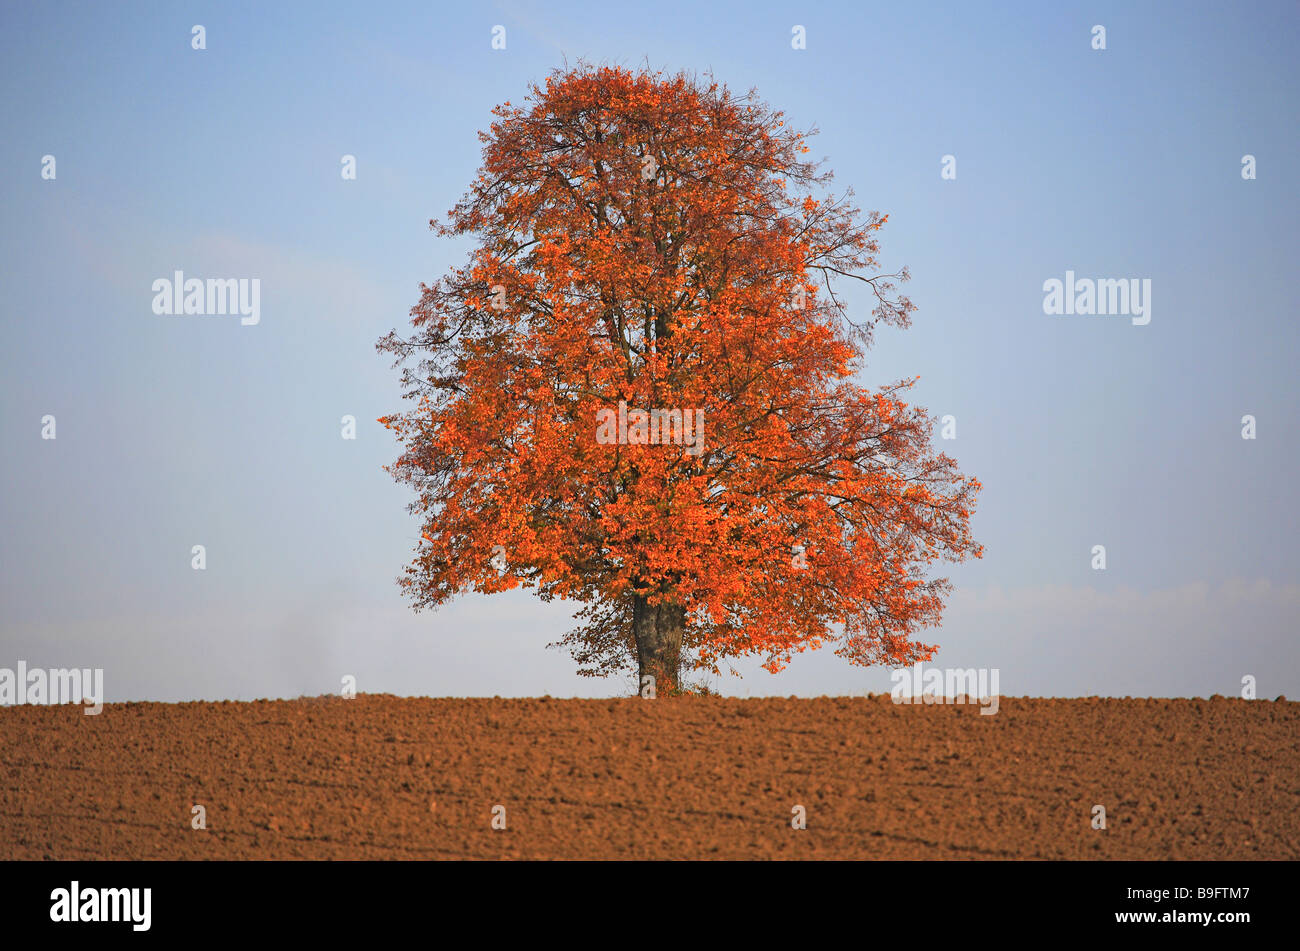 Limetree in autumn Stock Photo